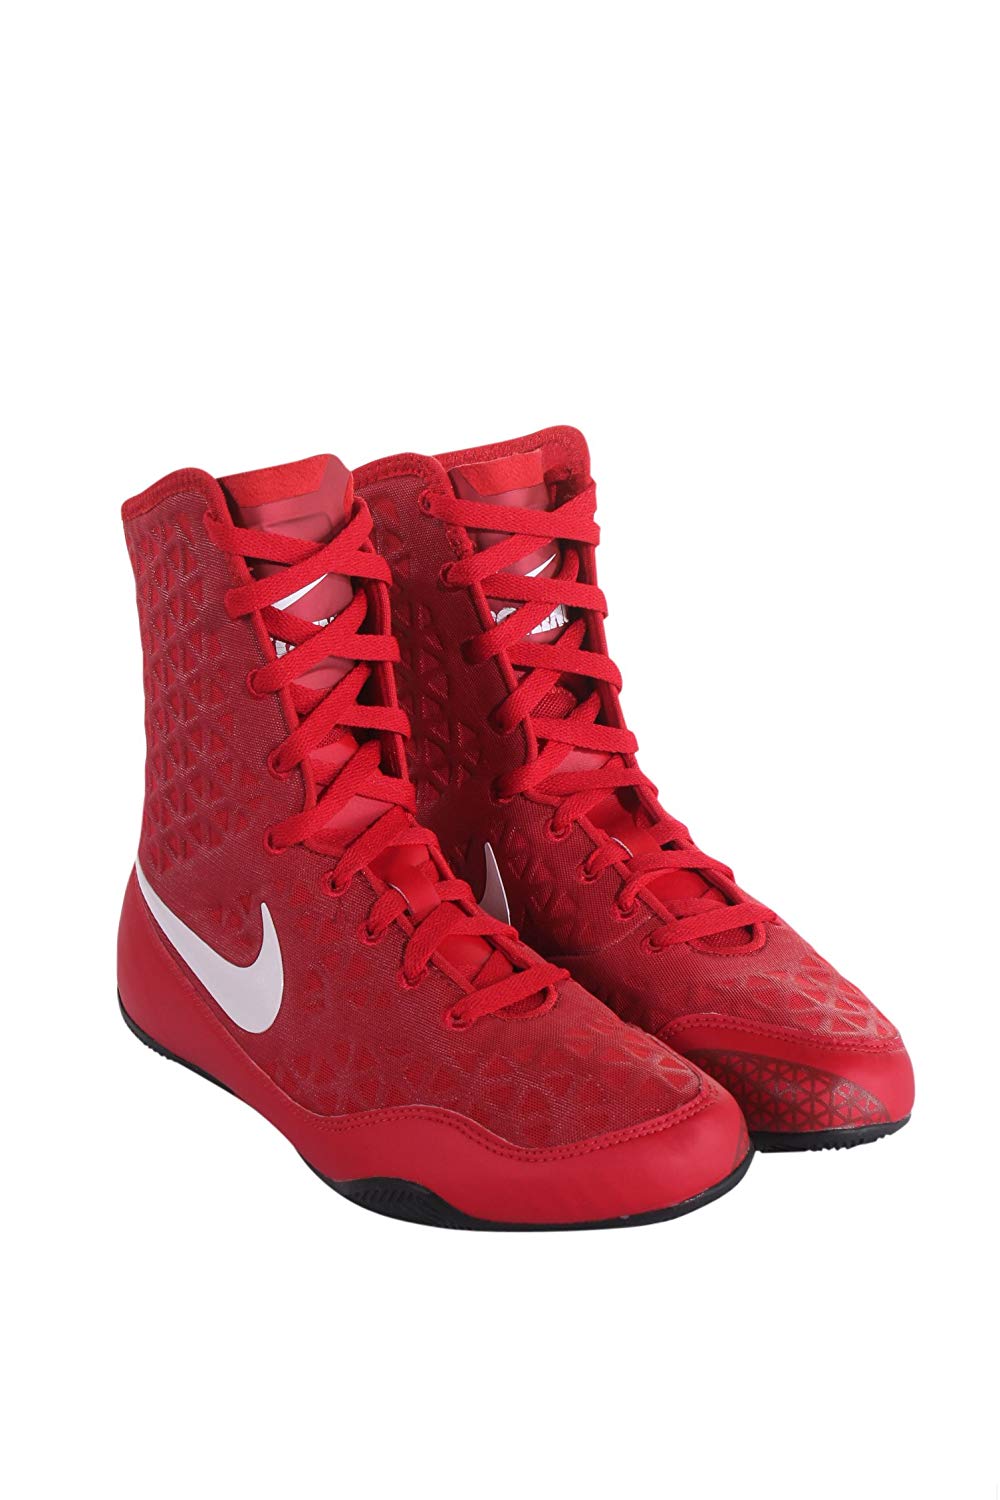 Chaussures de boxe Nike KO - Rouge/Blanc